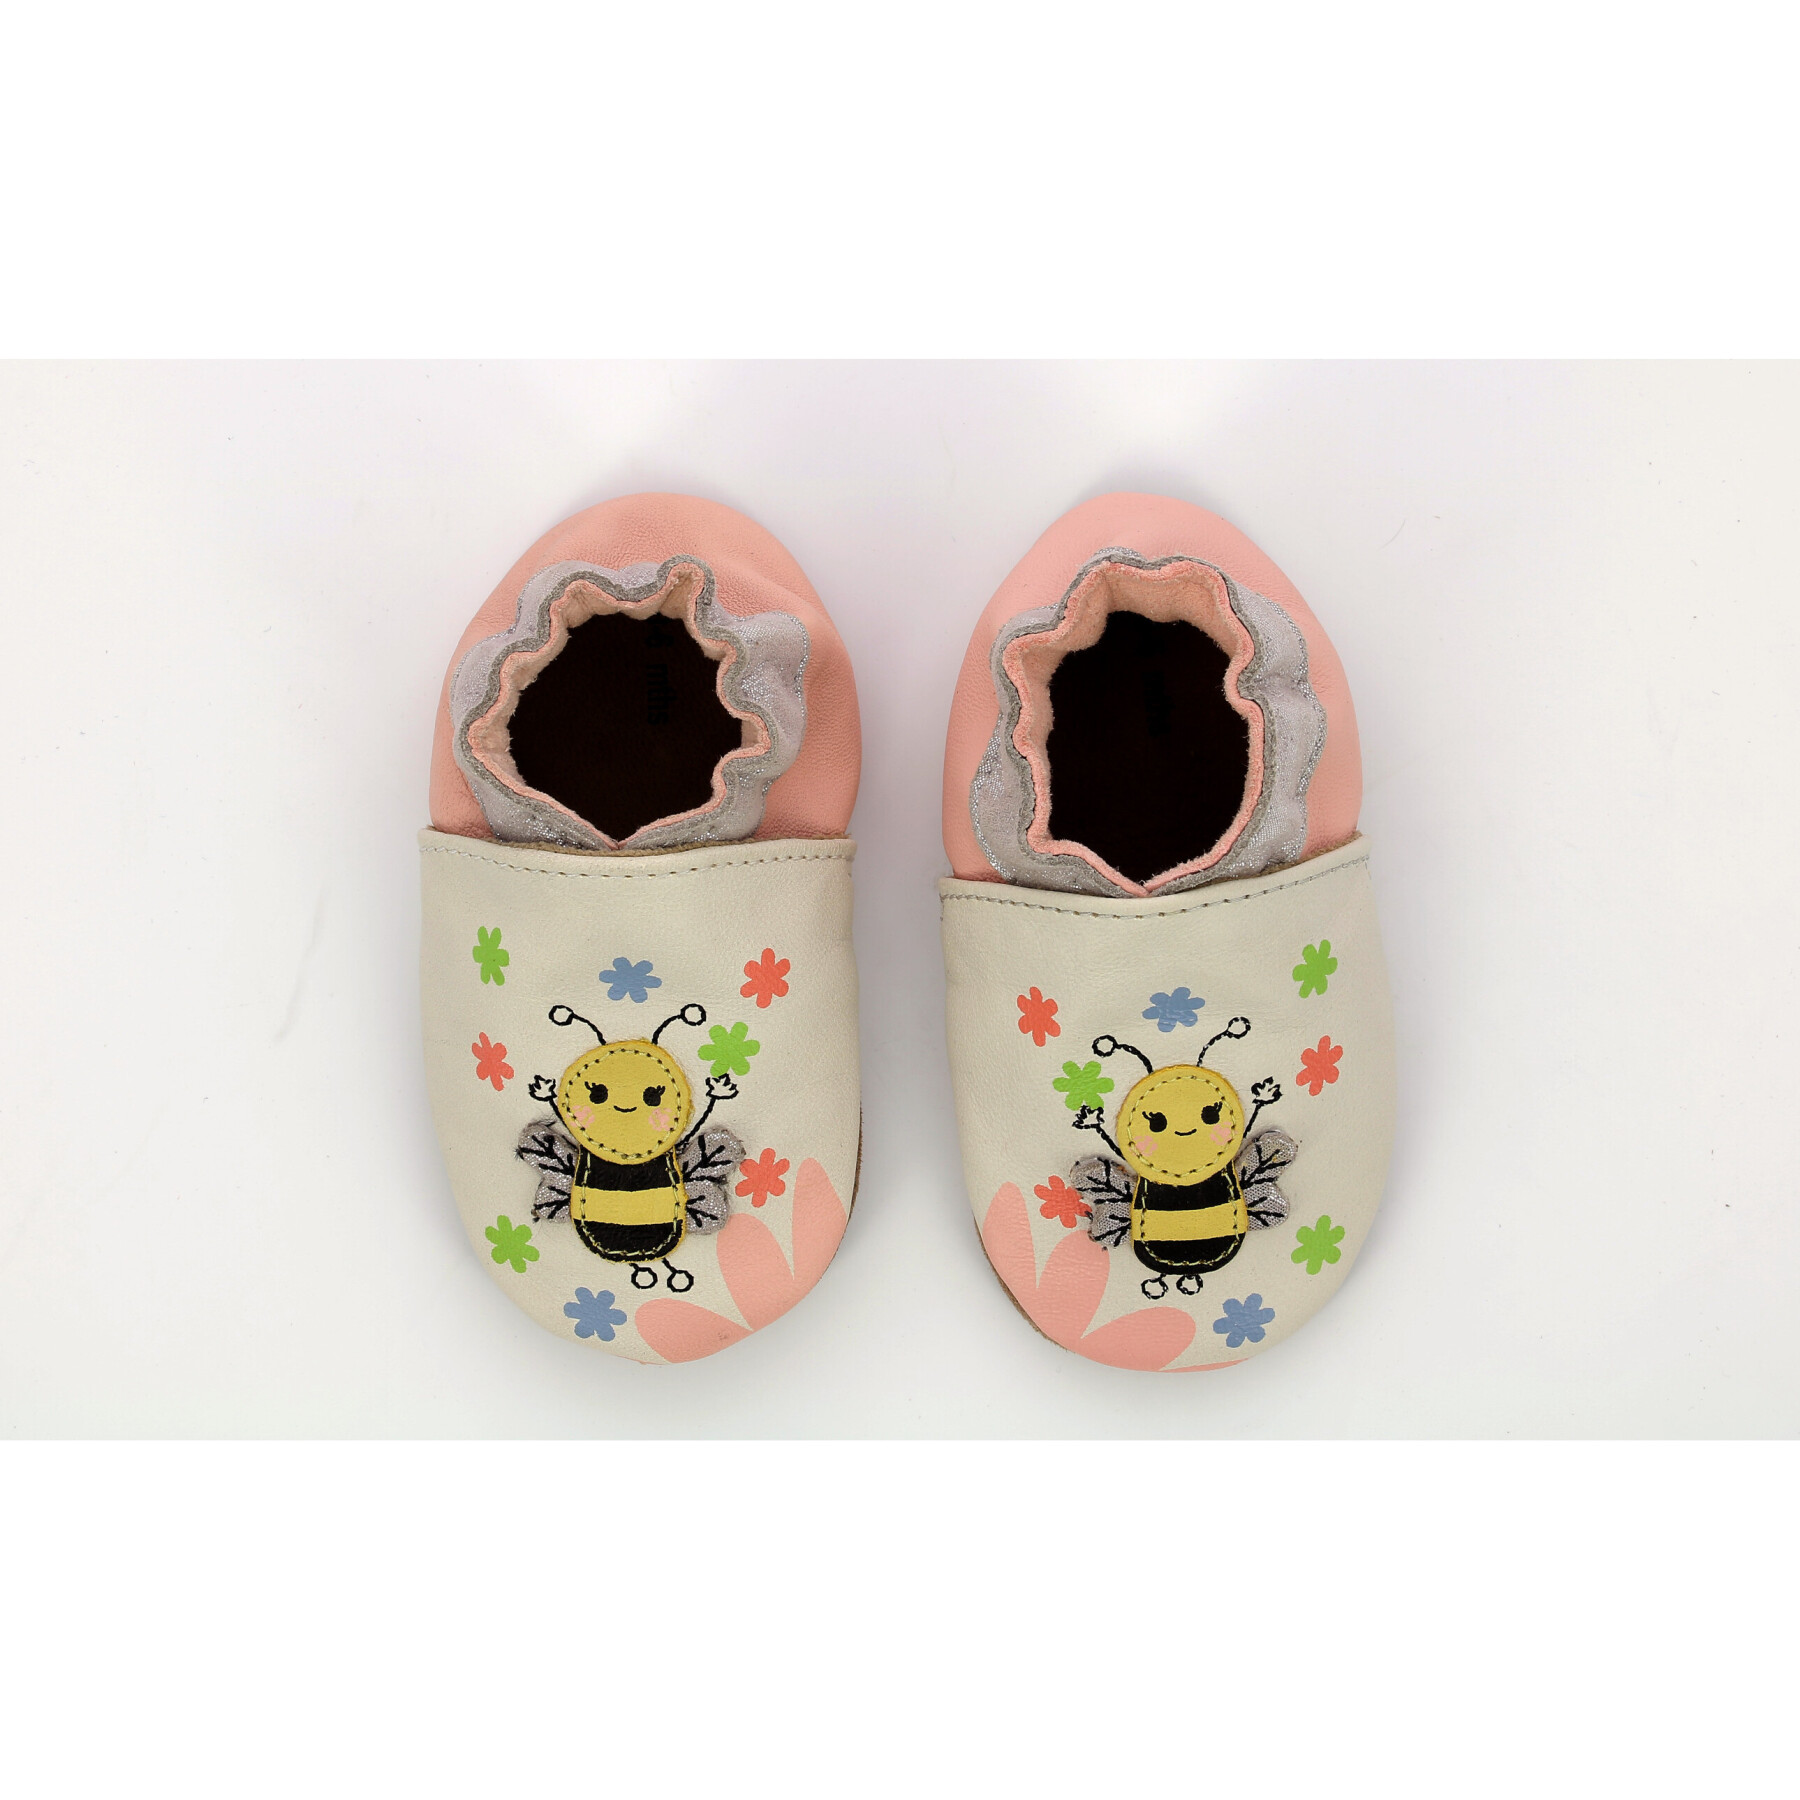 Baby girl slippers Robeez Bee Carefull